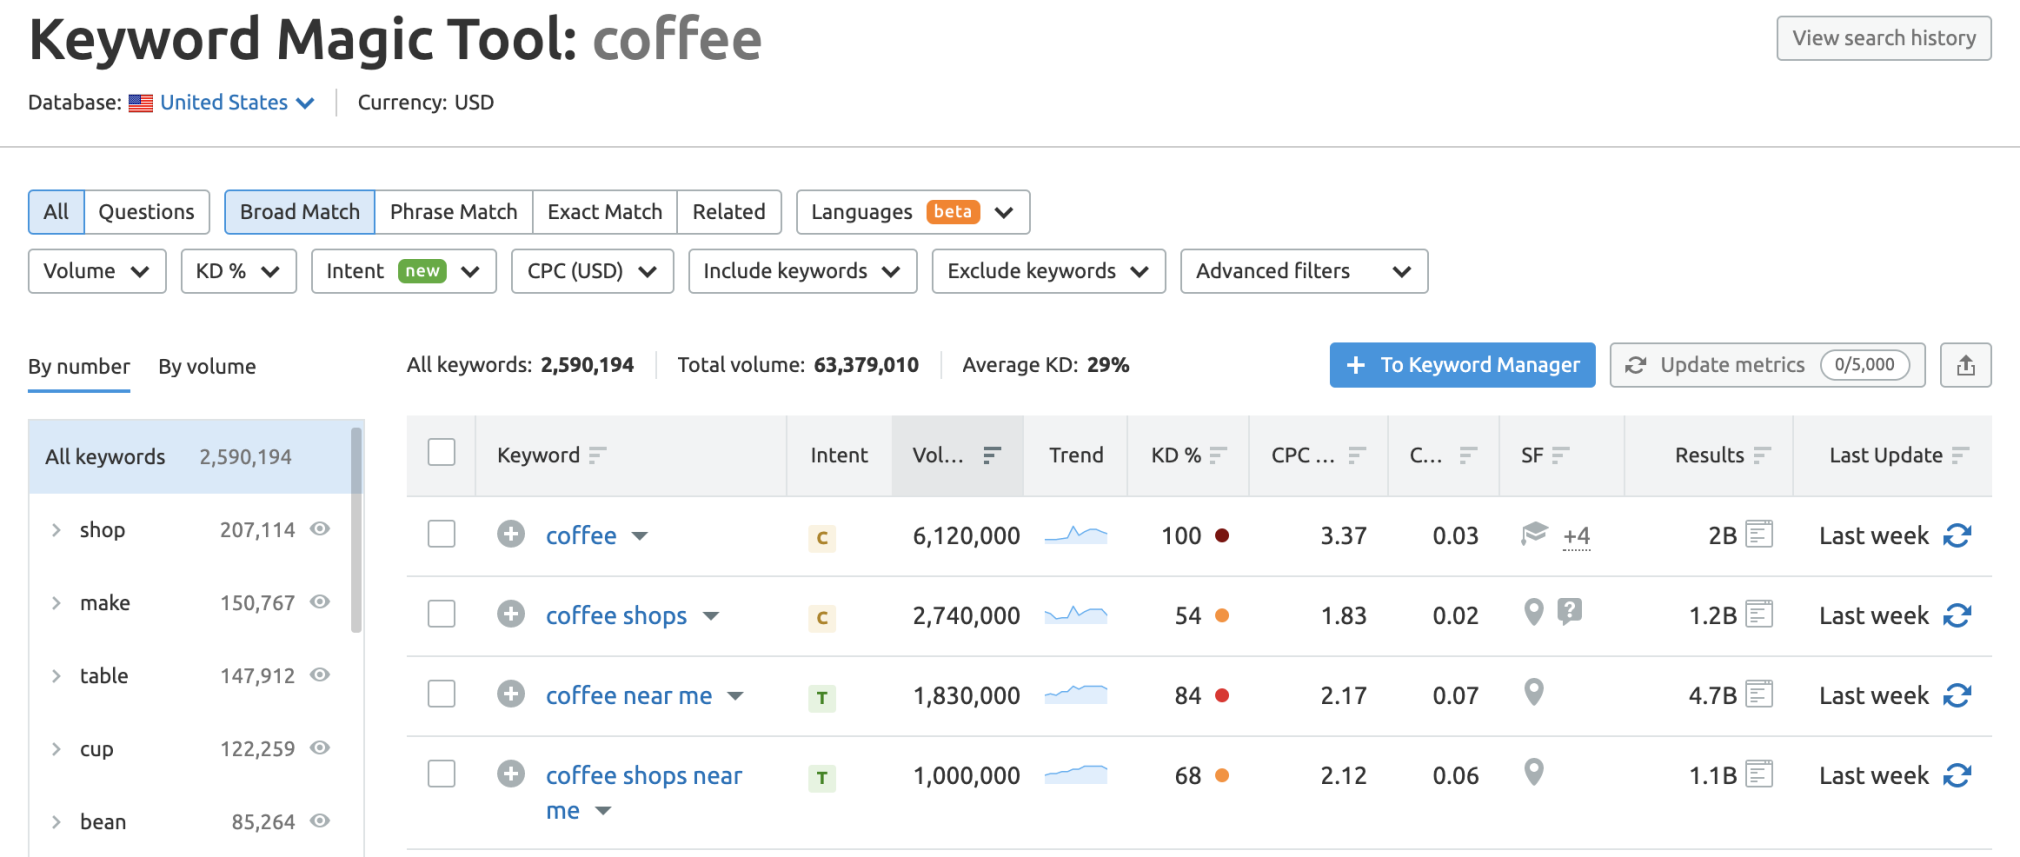 Keyword Magic Tool results for coffee